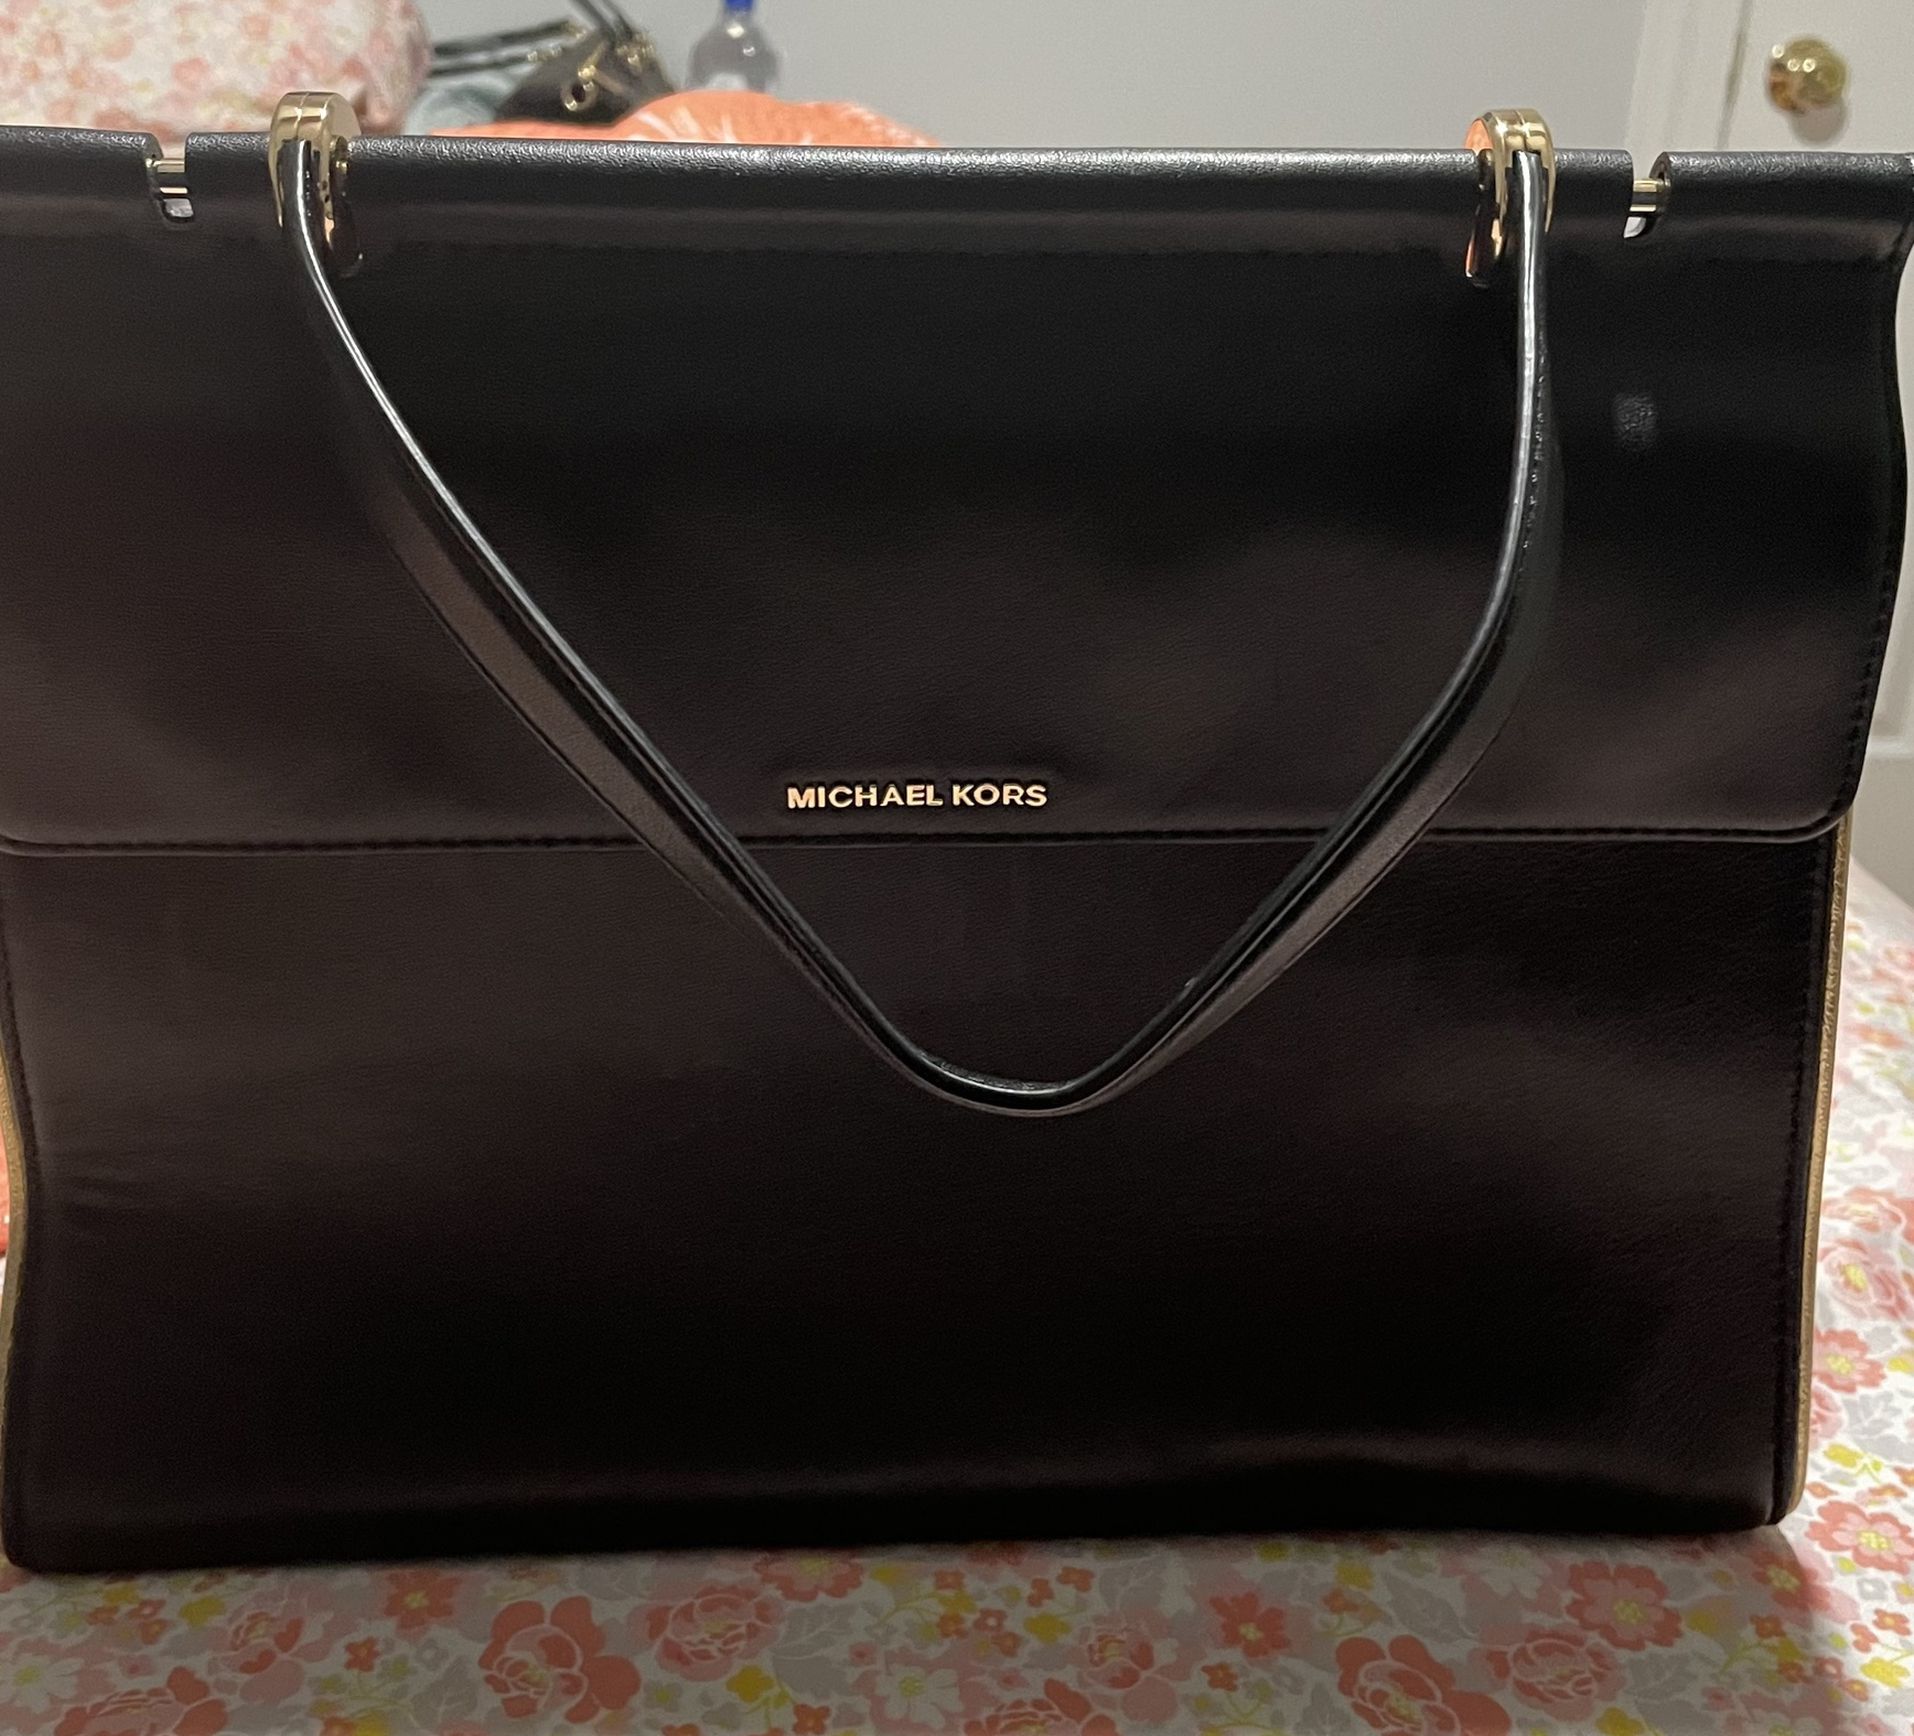 Michael Kors Large Black Leather Satchel Handbag w/gold Hardware